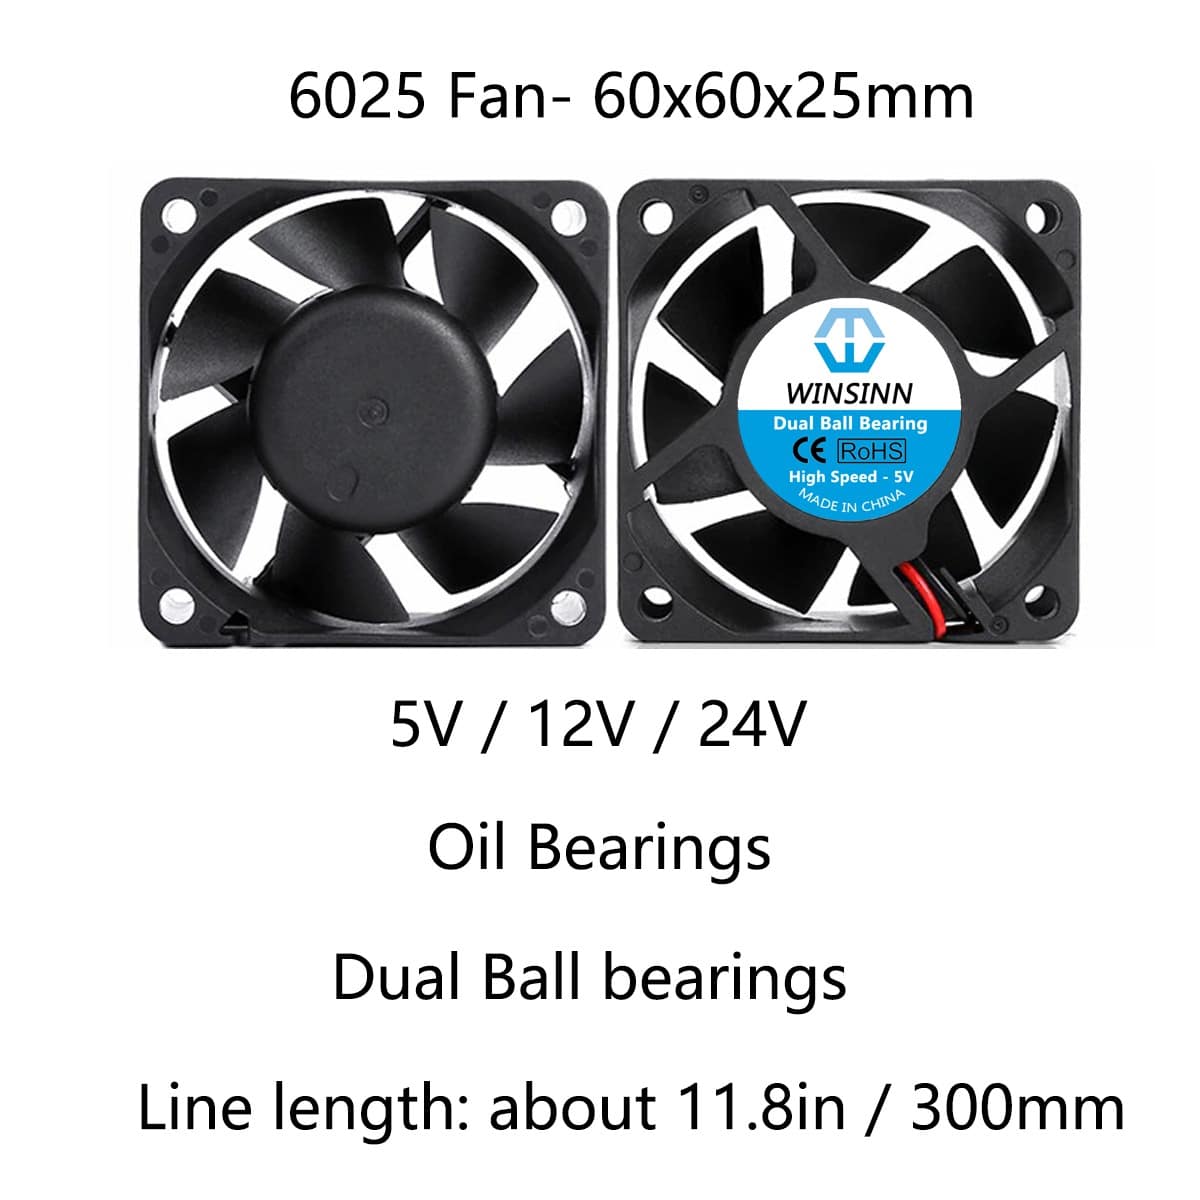 WINSINN DC Cooling 60mm Fan Improved for PC Computer